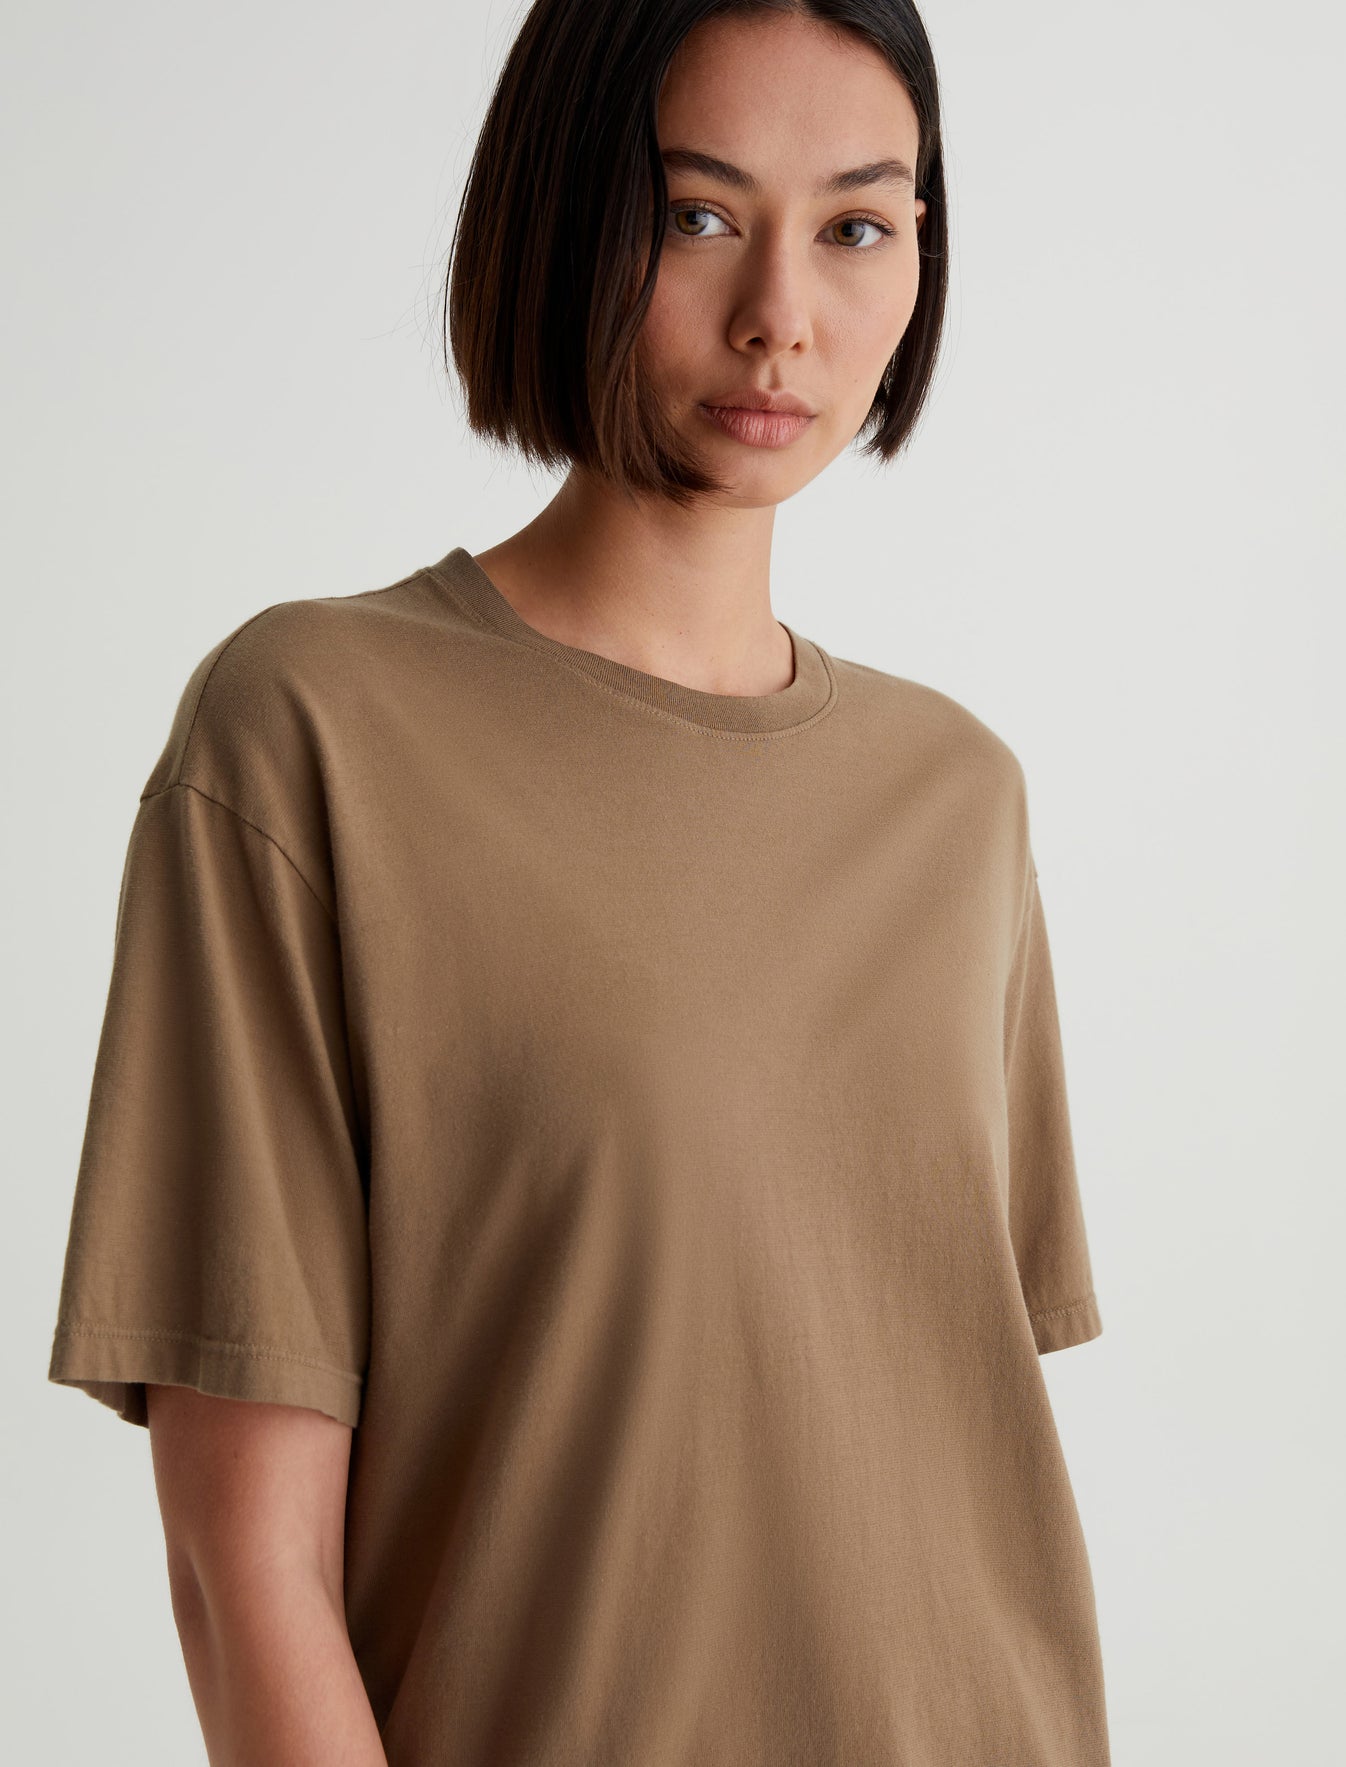 Karter Ex-Boyfriend Wild Mushroom Oversized Fit Short Sleeve Crew Neck T-Shirt Womens Top Photo 3